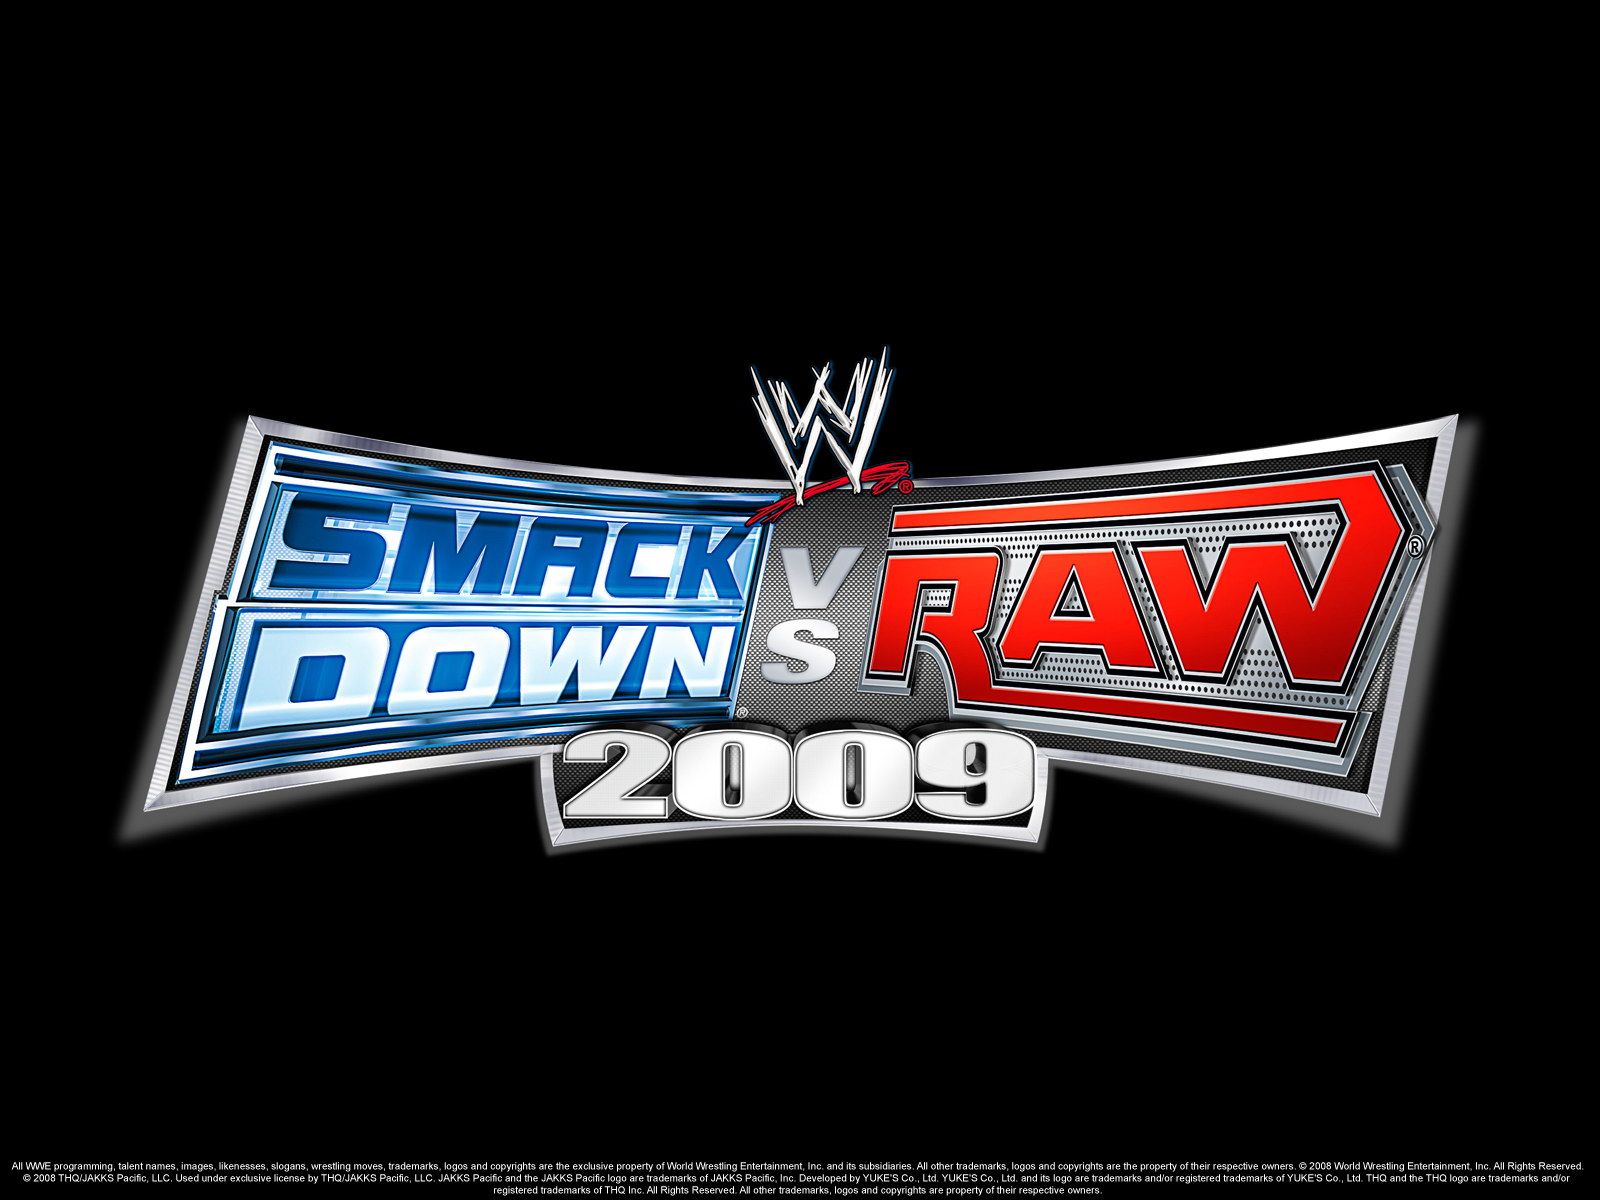 WWE Smackdown vs Raw Wallpaper. Free games, Wwe, Free pc games